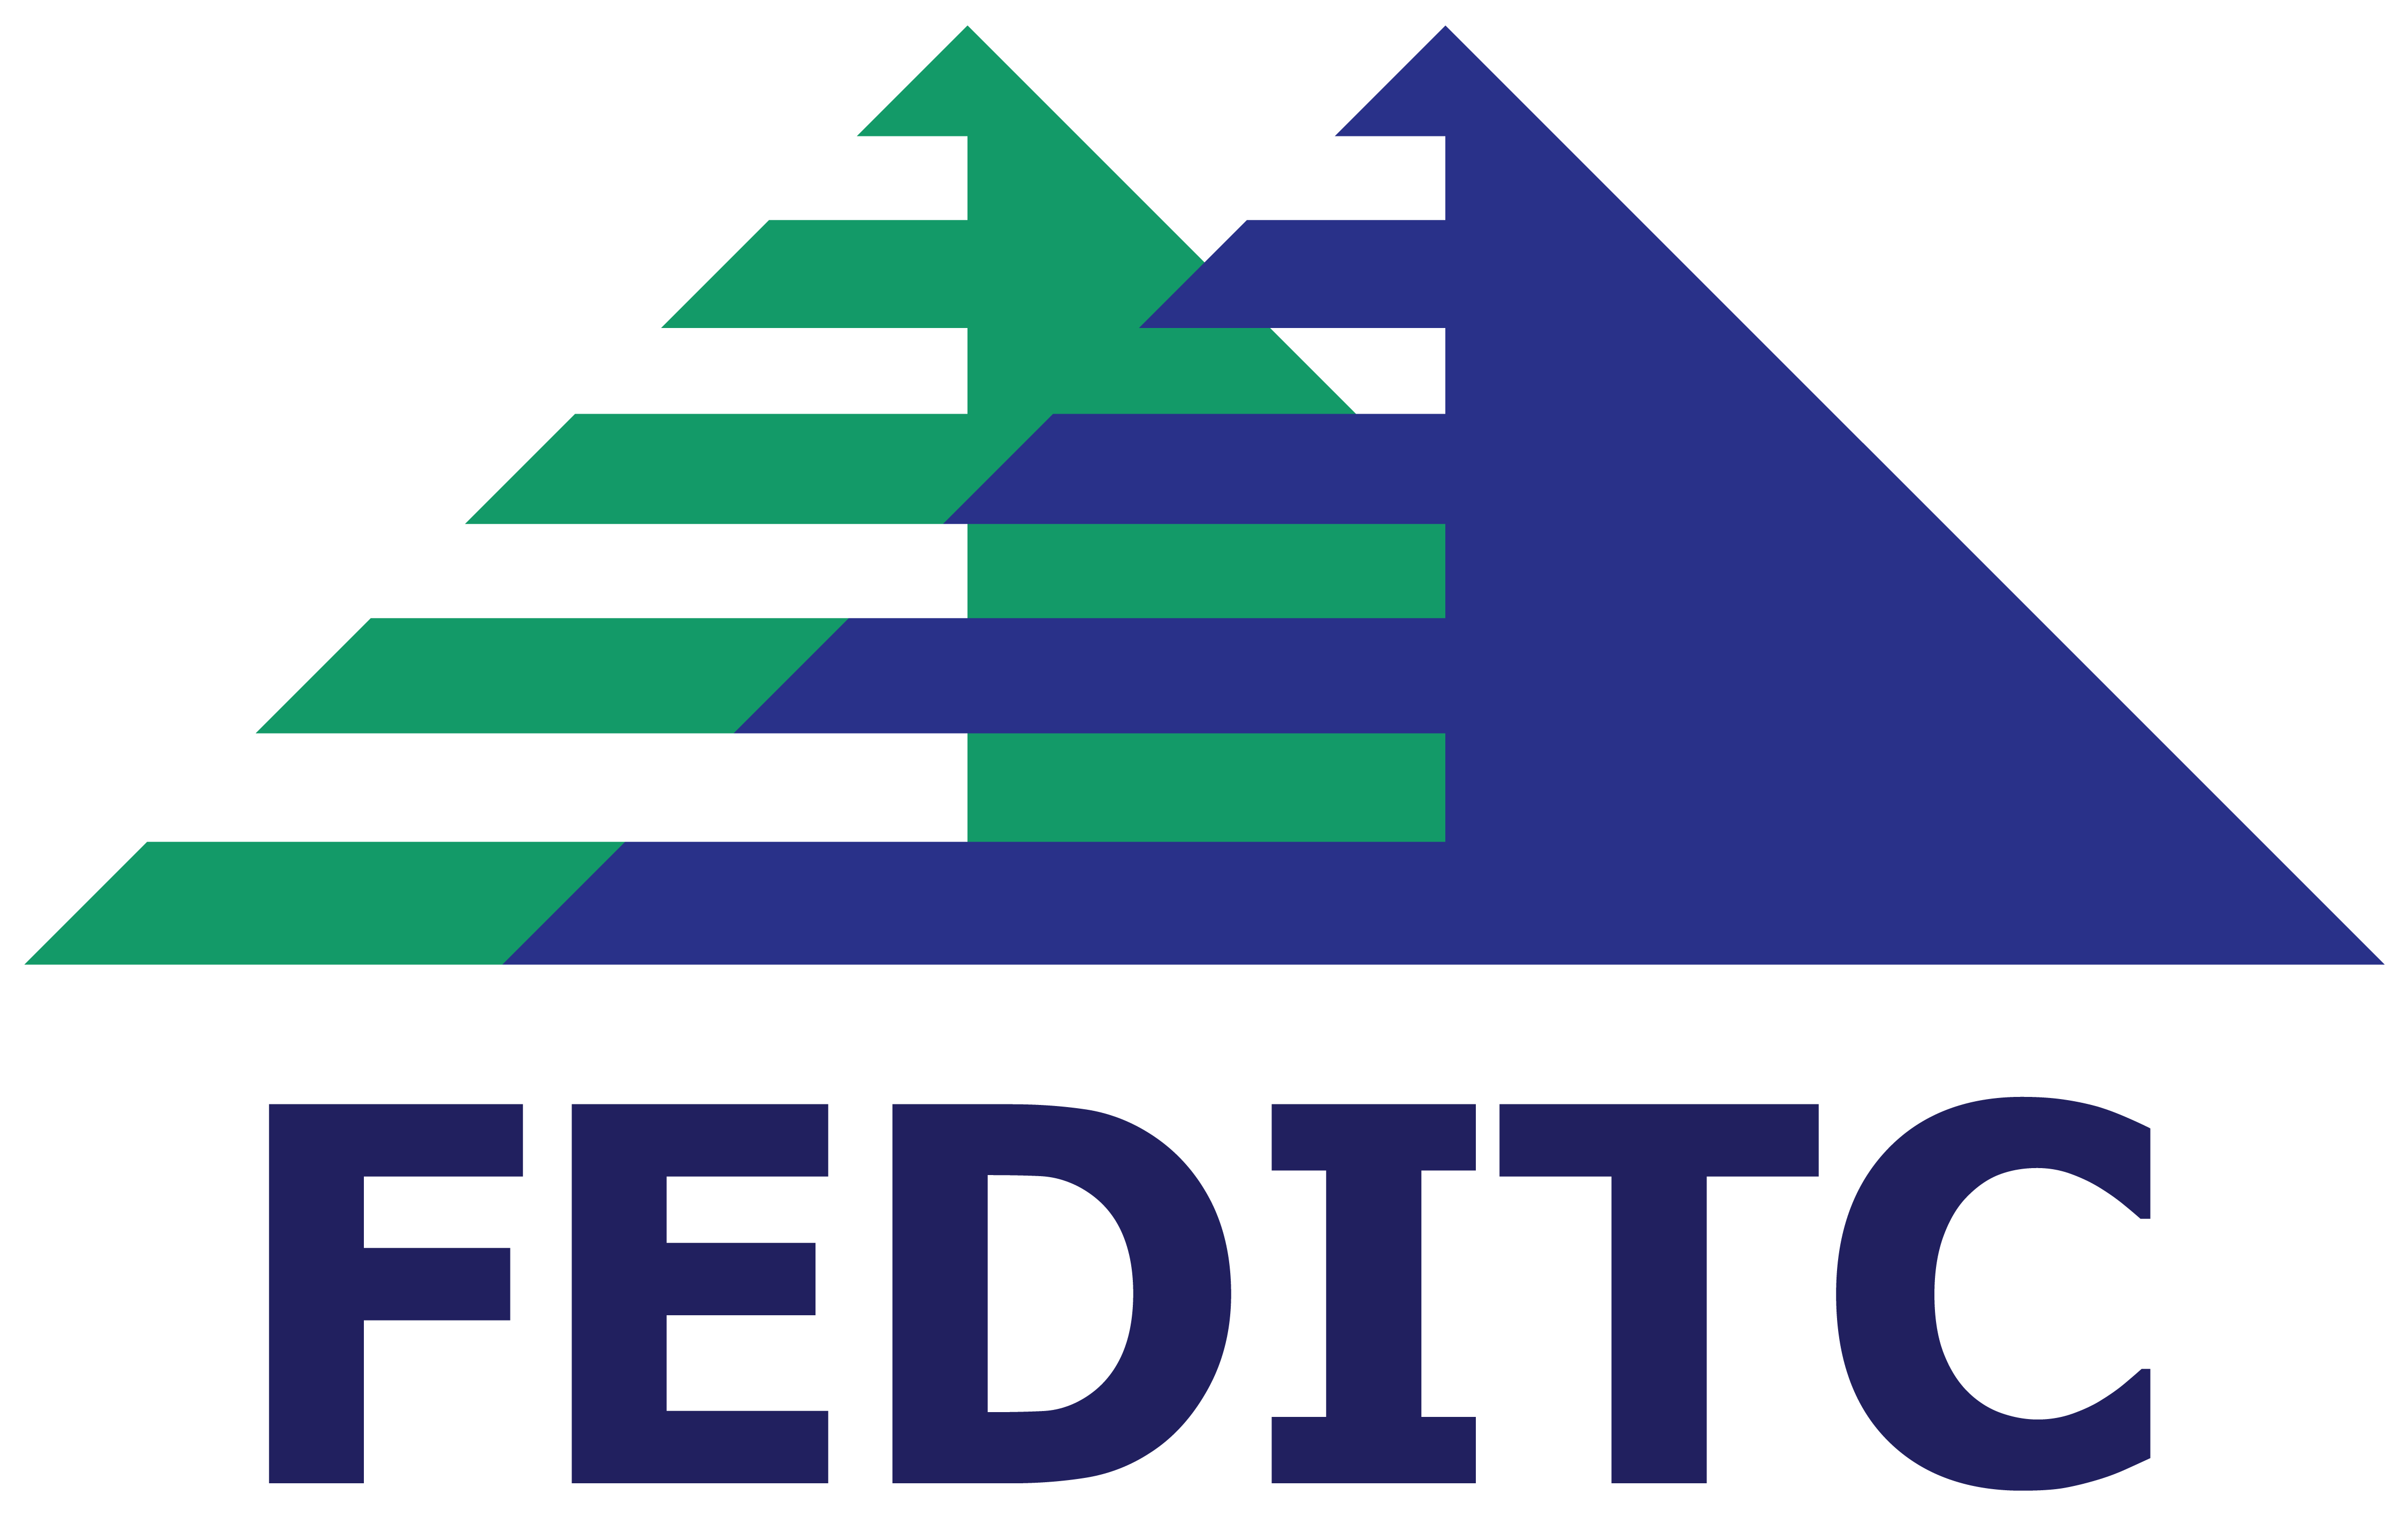 FEDITC Logo